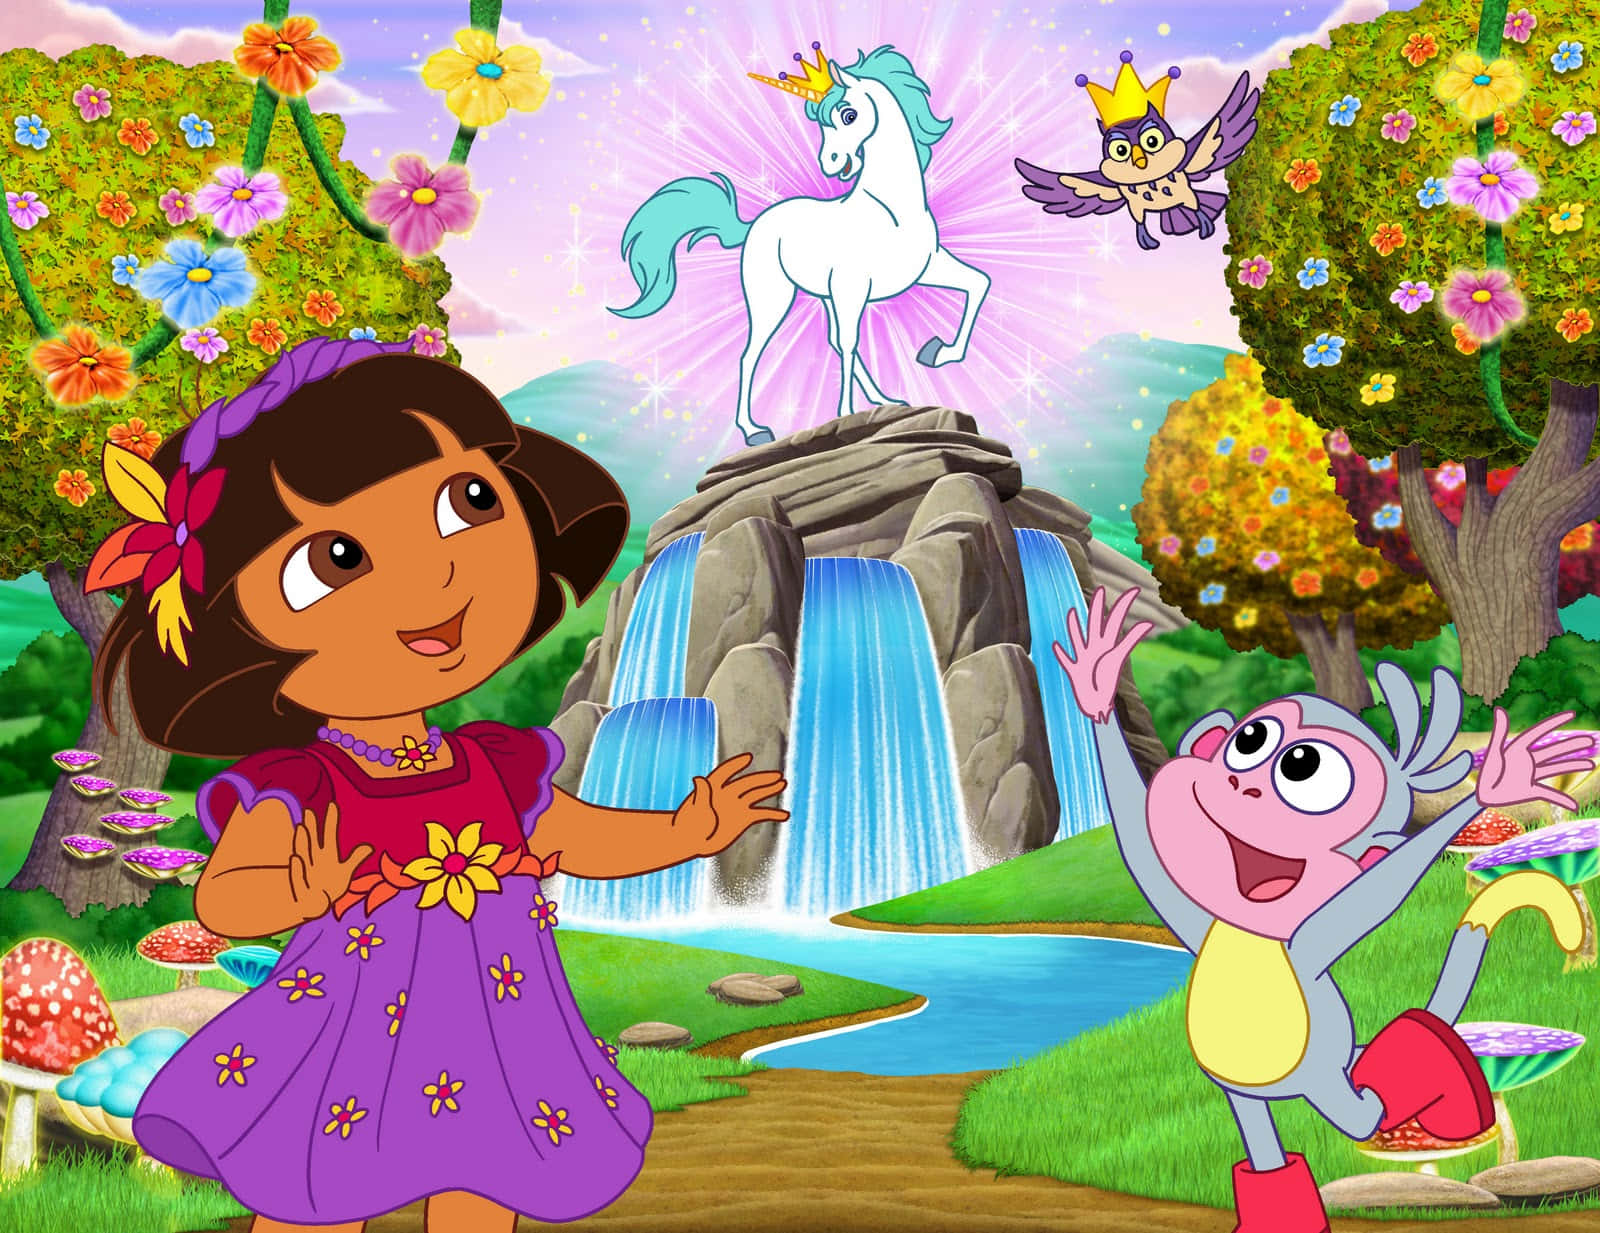 Dora the Explorer embarks on a new adventure